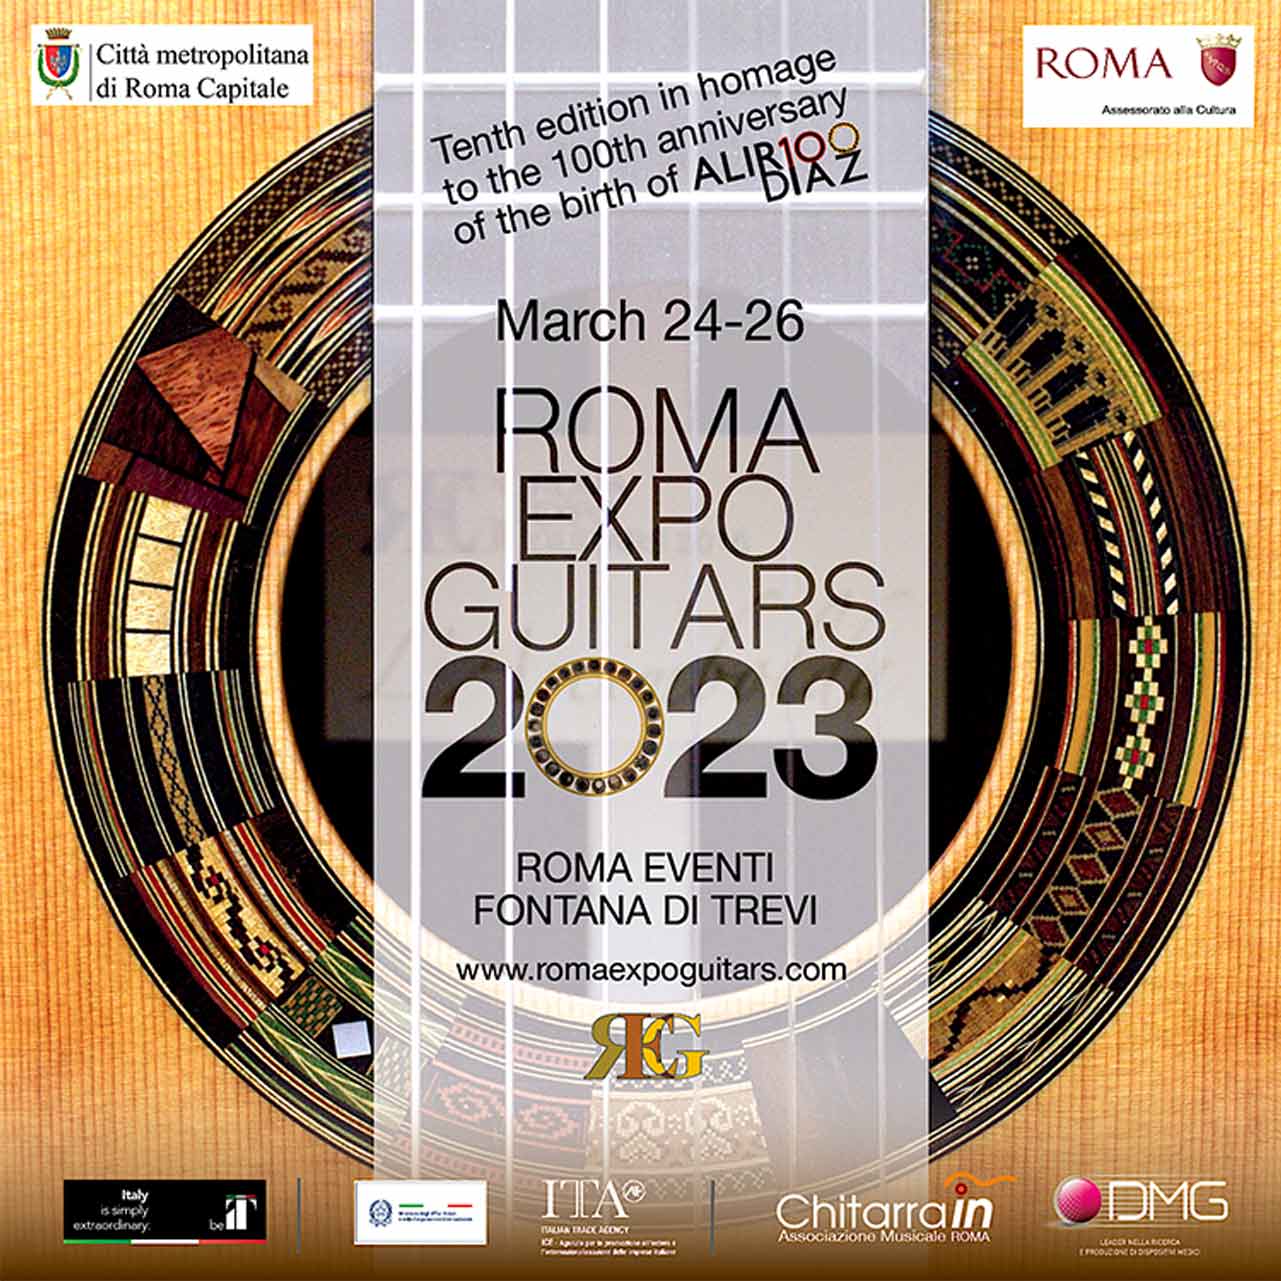 Roma expo guitars 2023